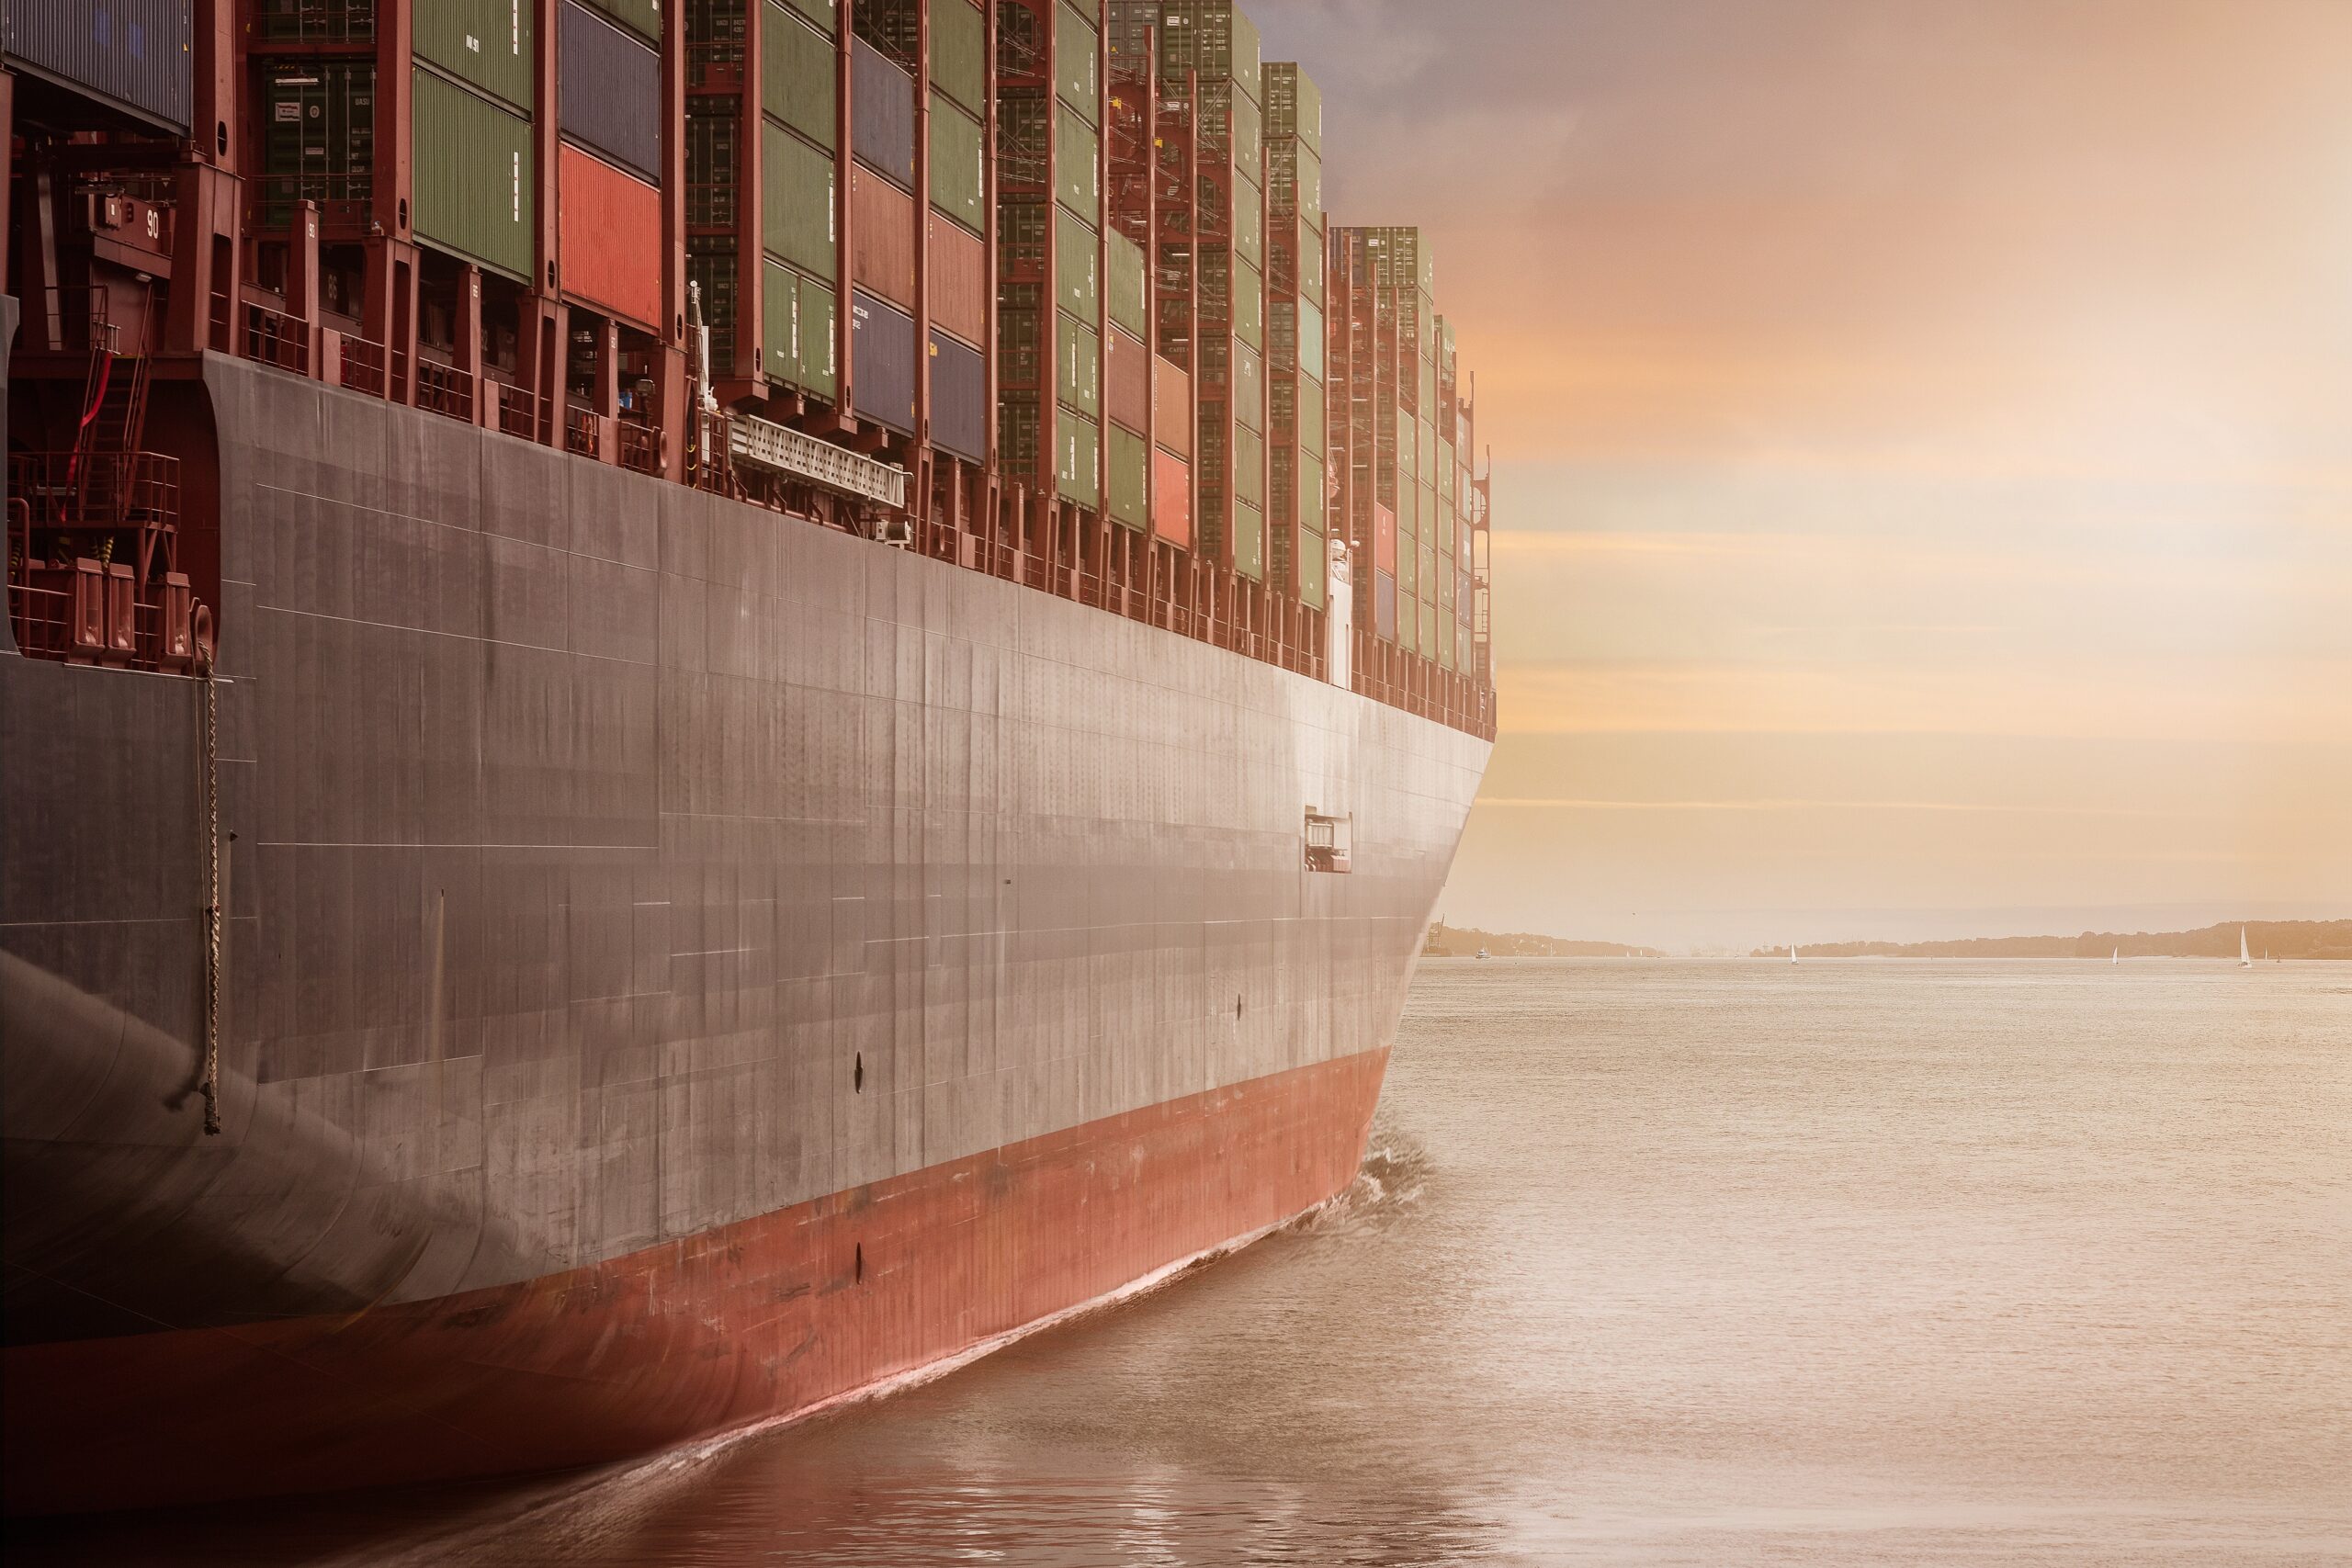 Ocean freight transportation